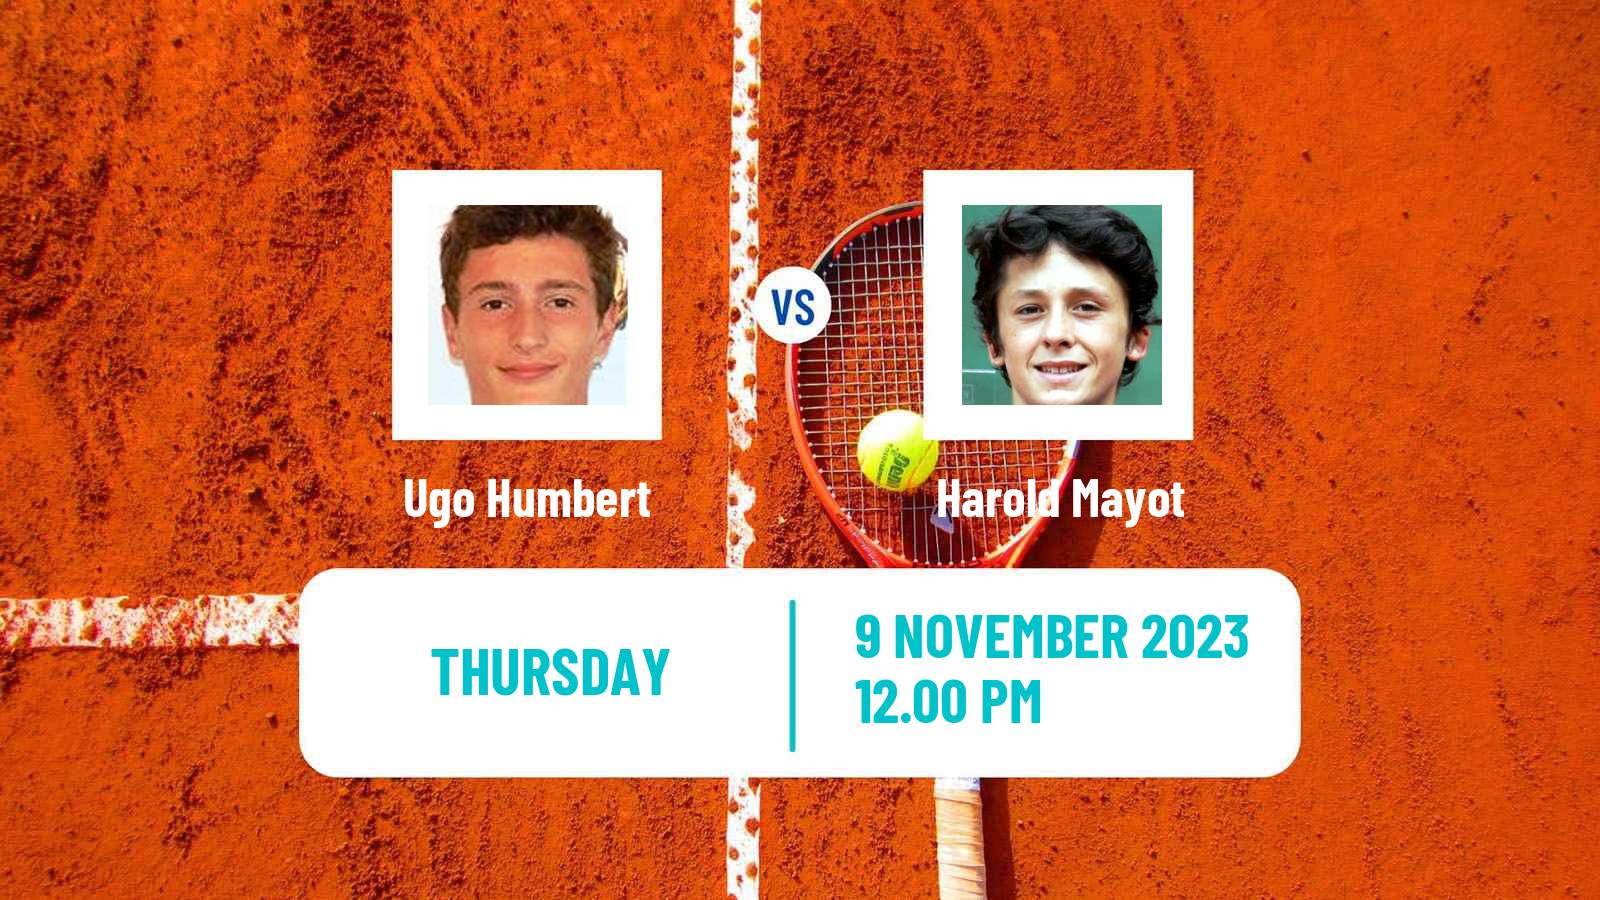 Tennis ATP Metz Ugo Humbert - Harold Mayot